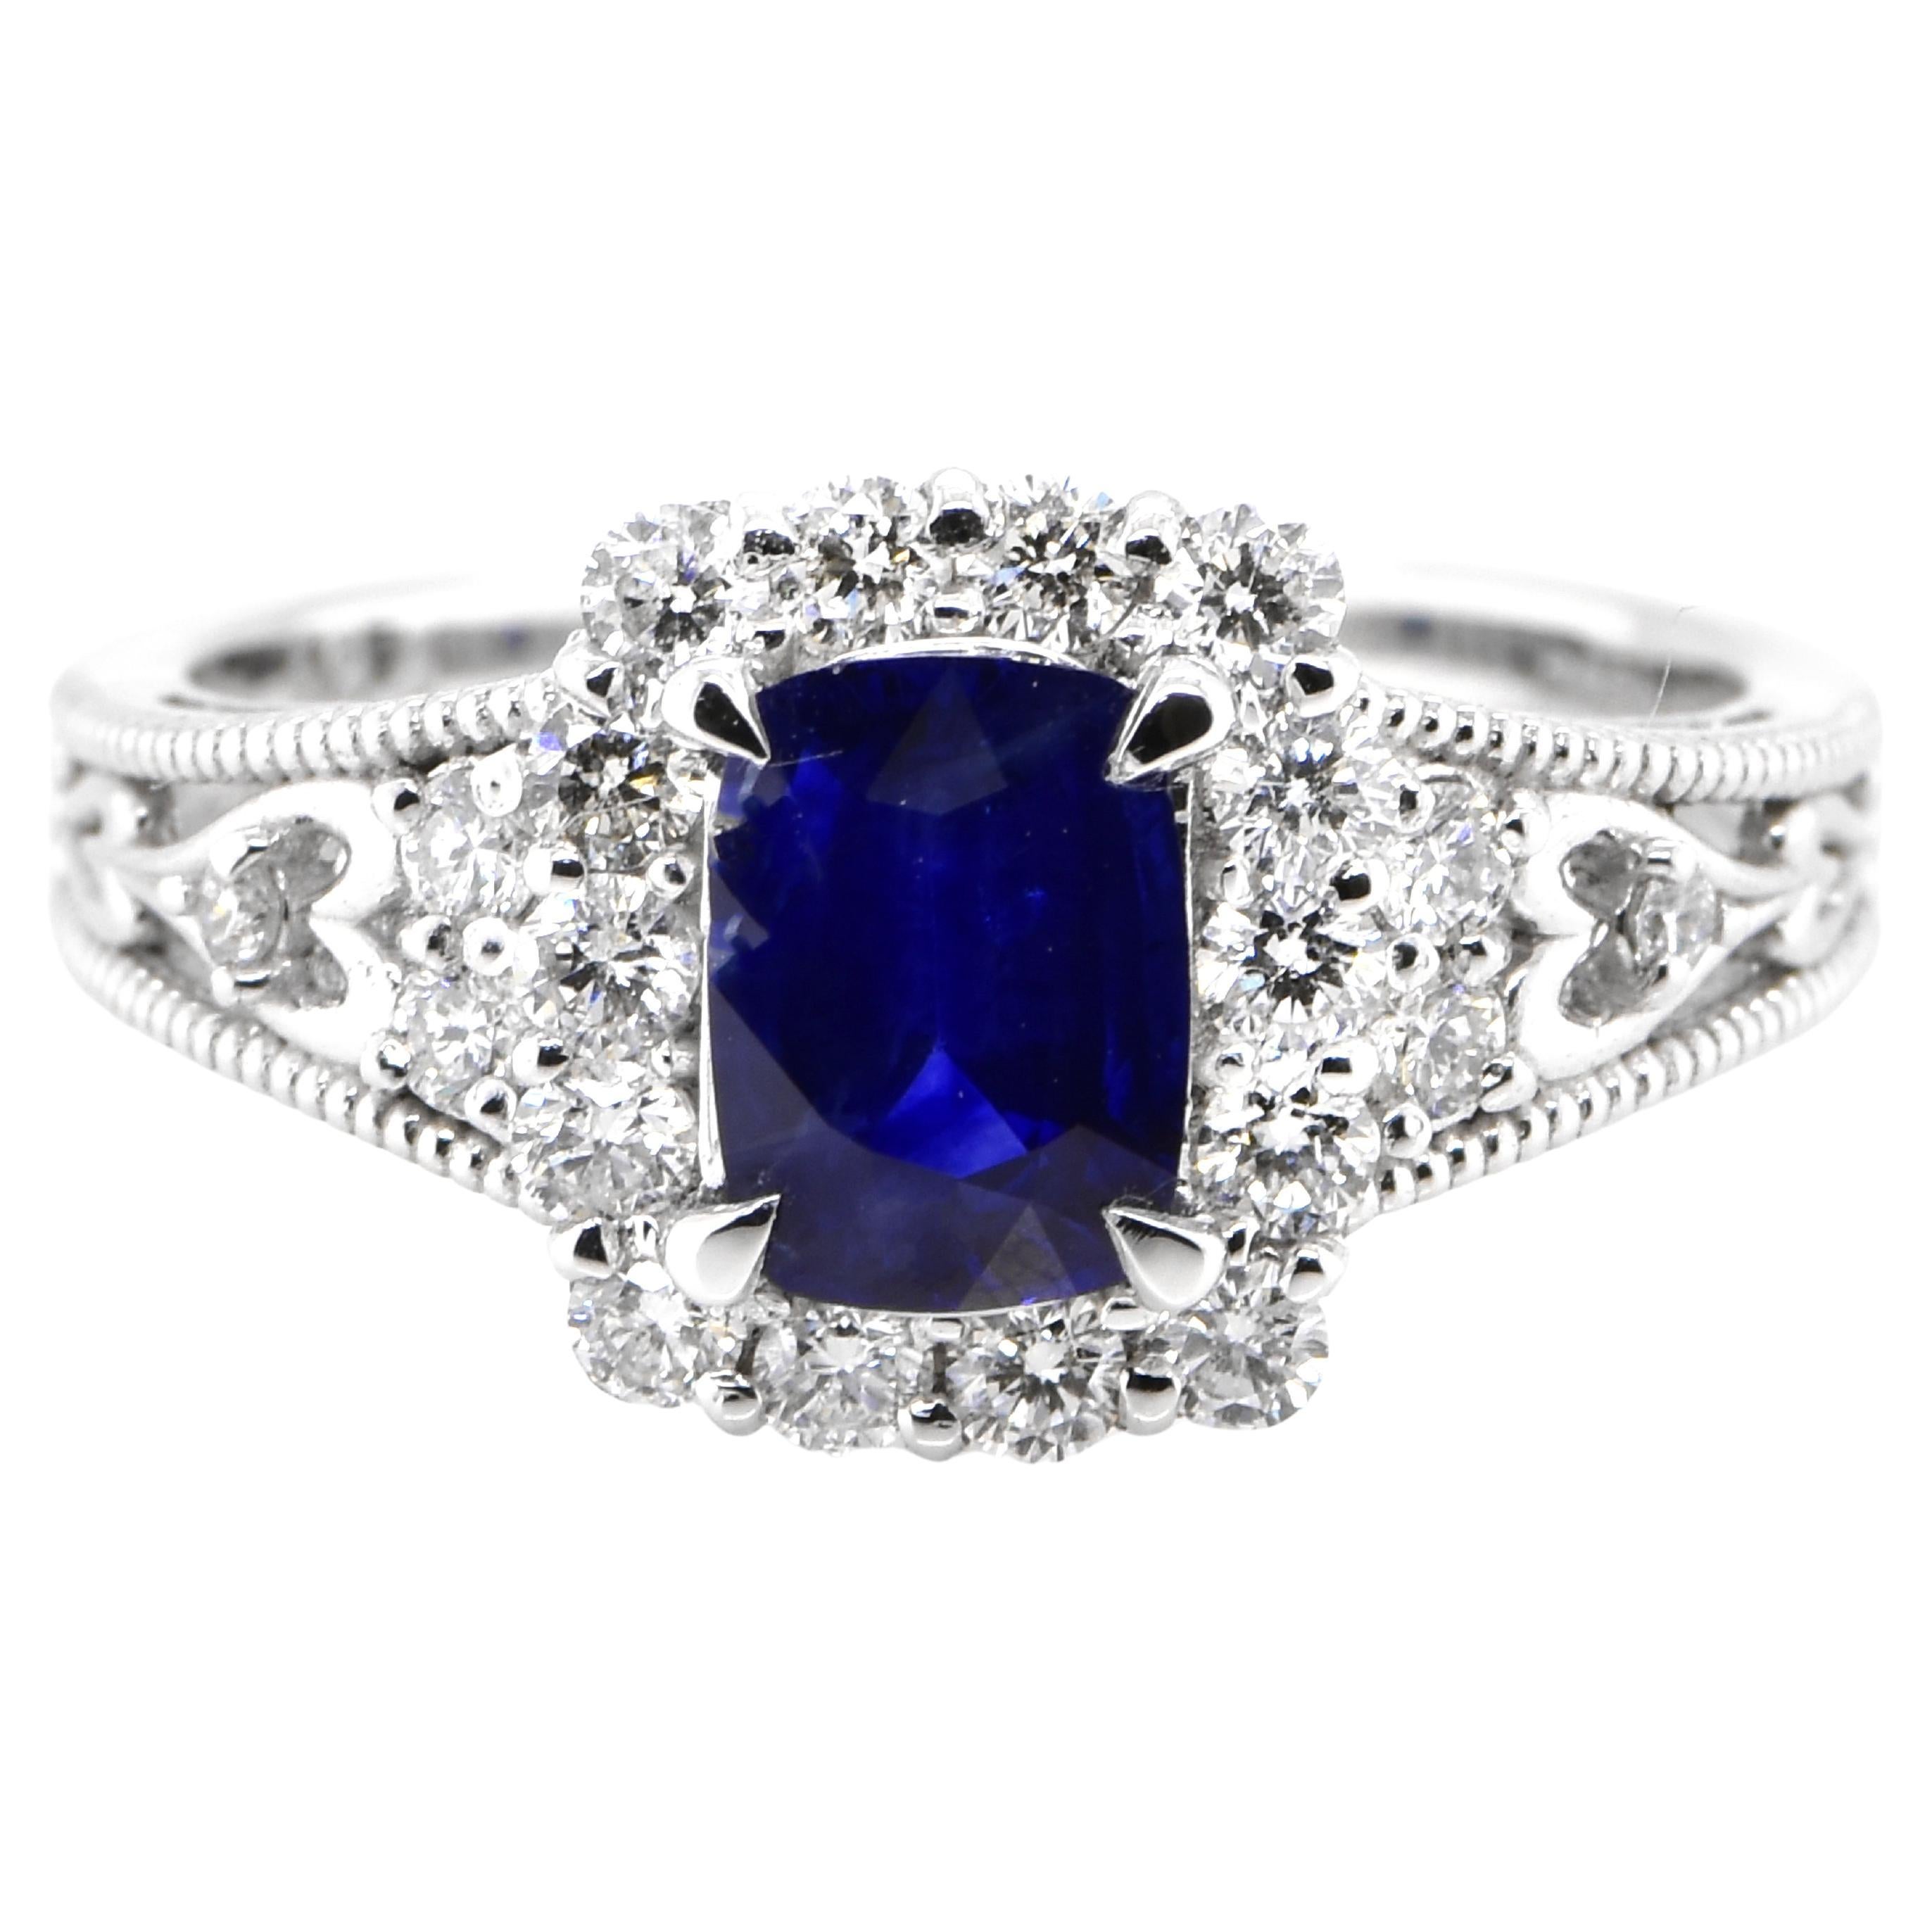 1.24 Carat Natural Royal Blue Sapphire & Diamond Ring set in Platinum